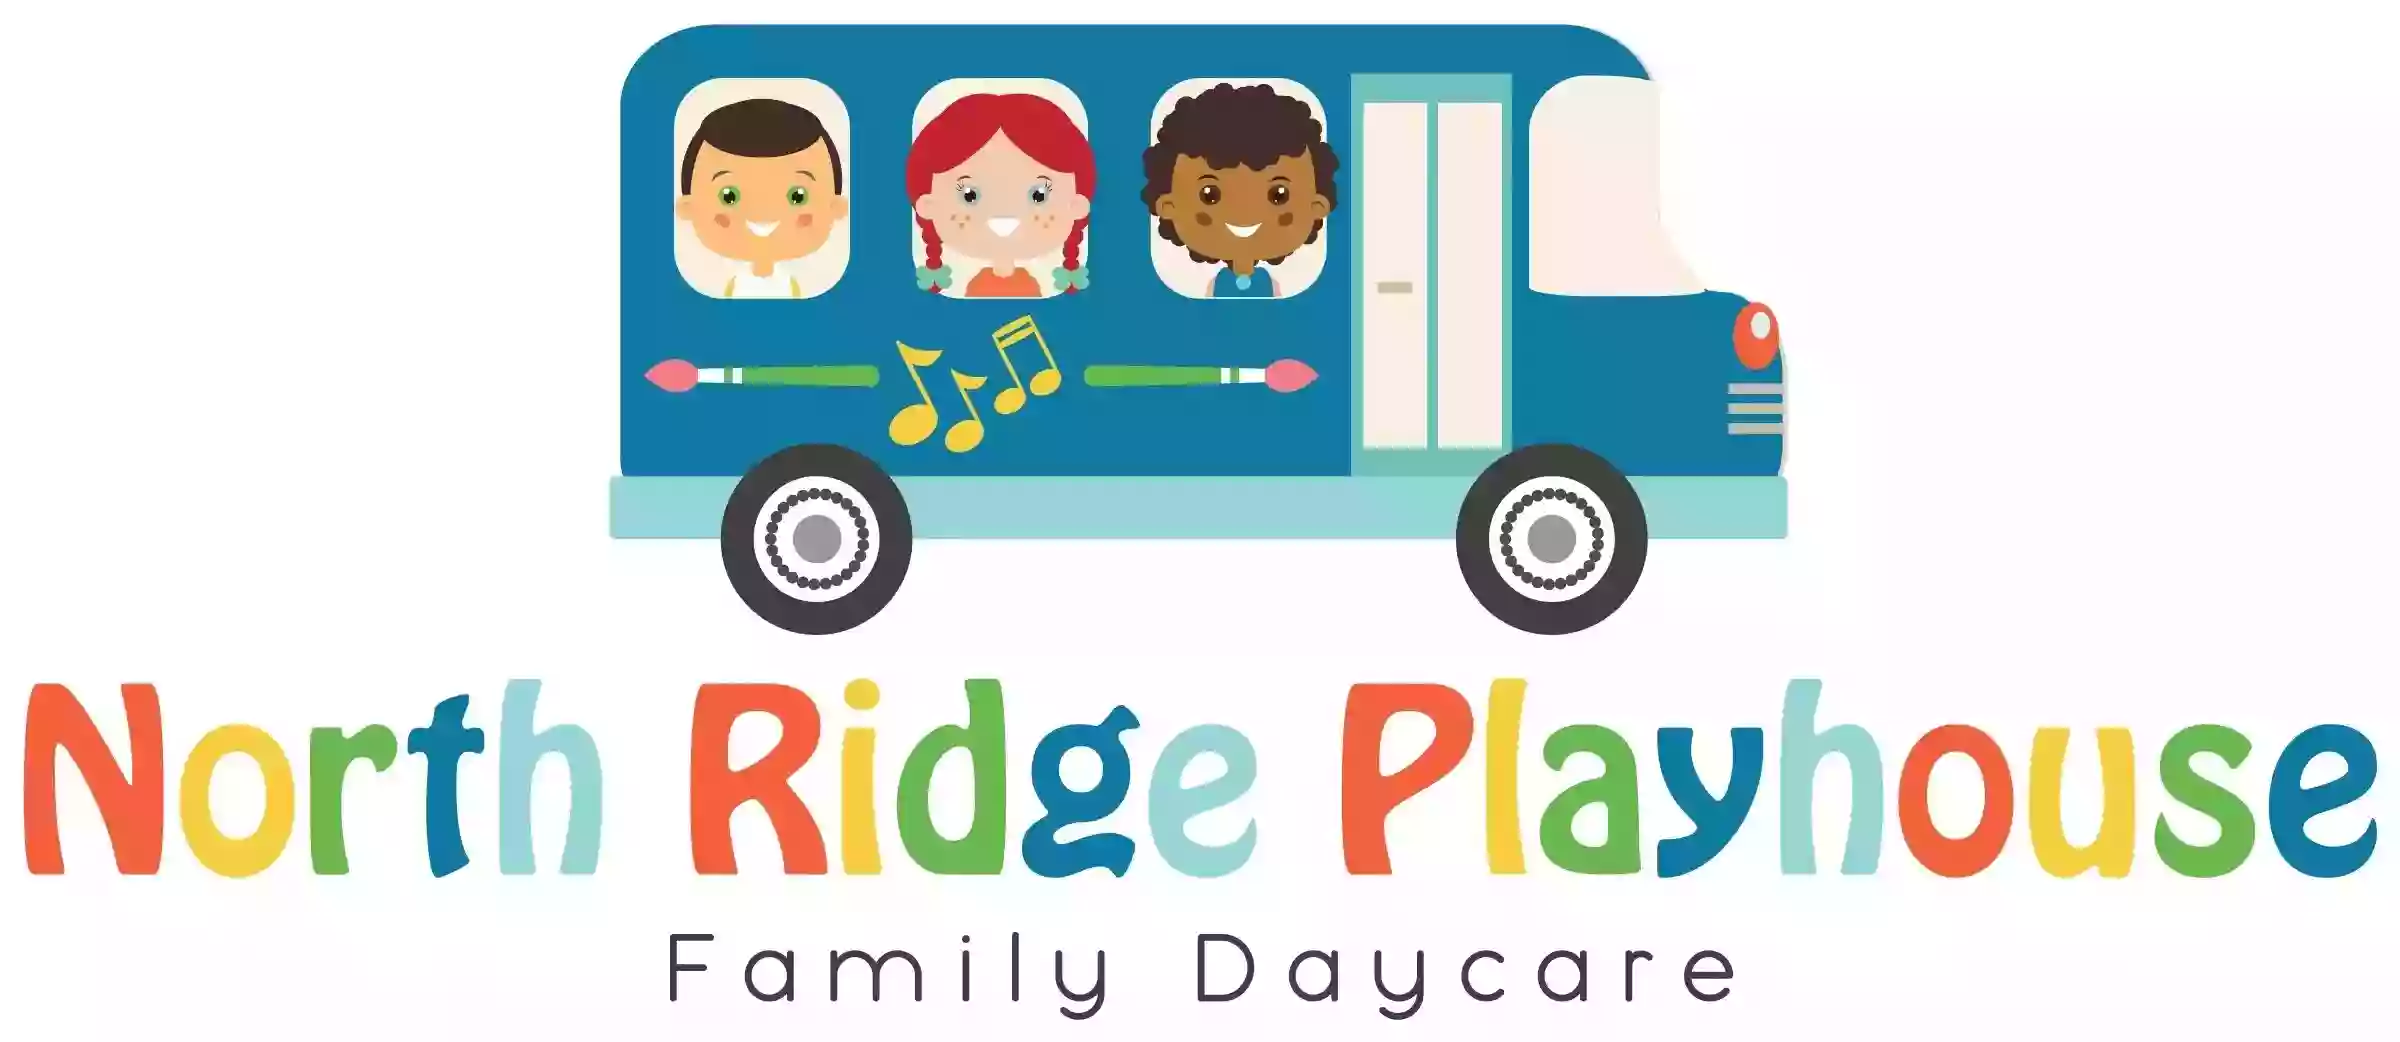 North Ridge Playhouse Family Daycare